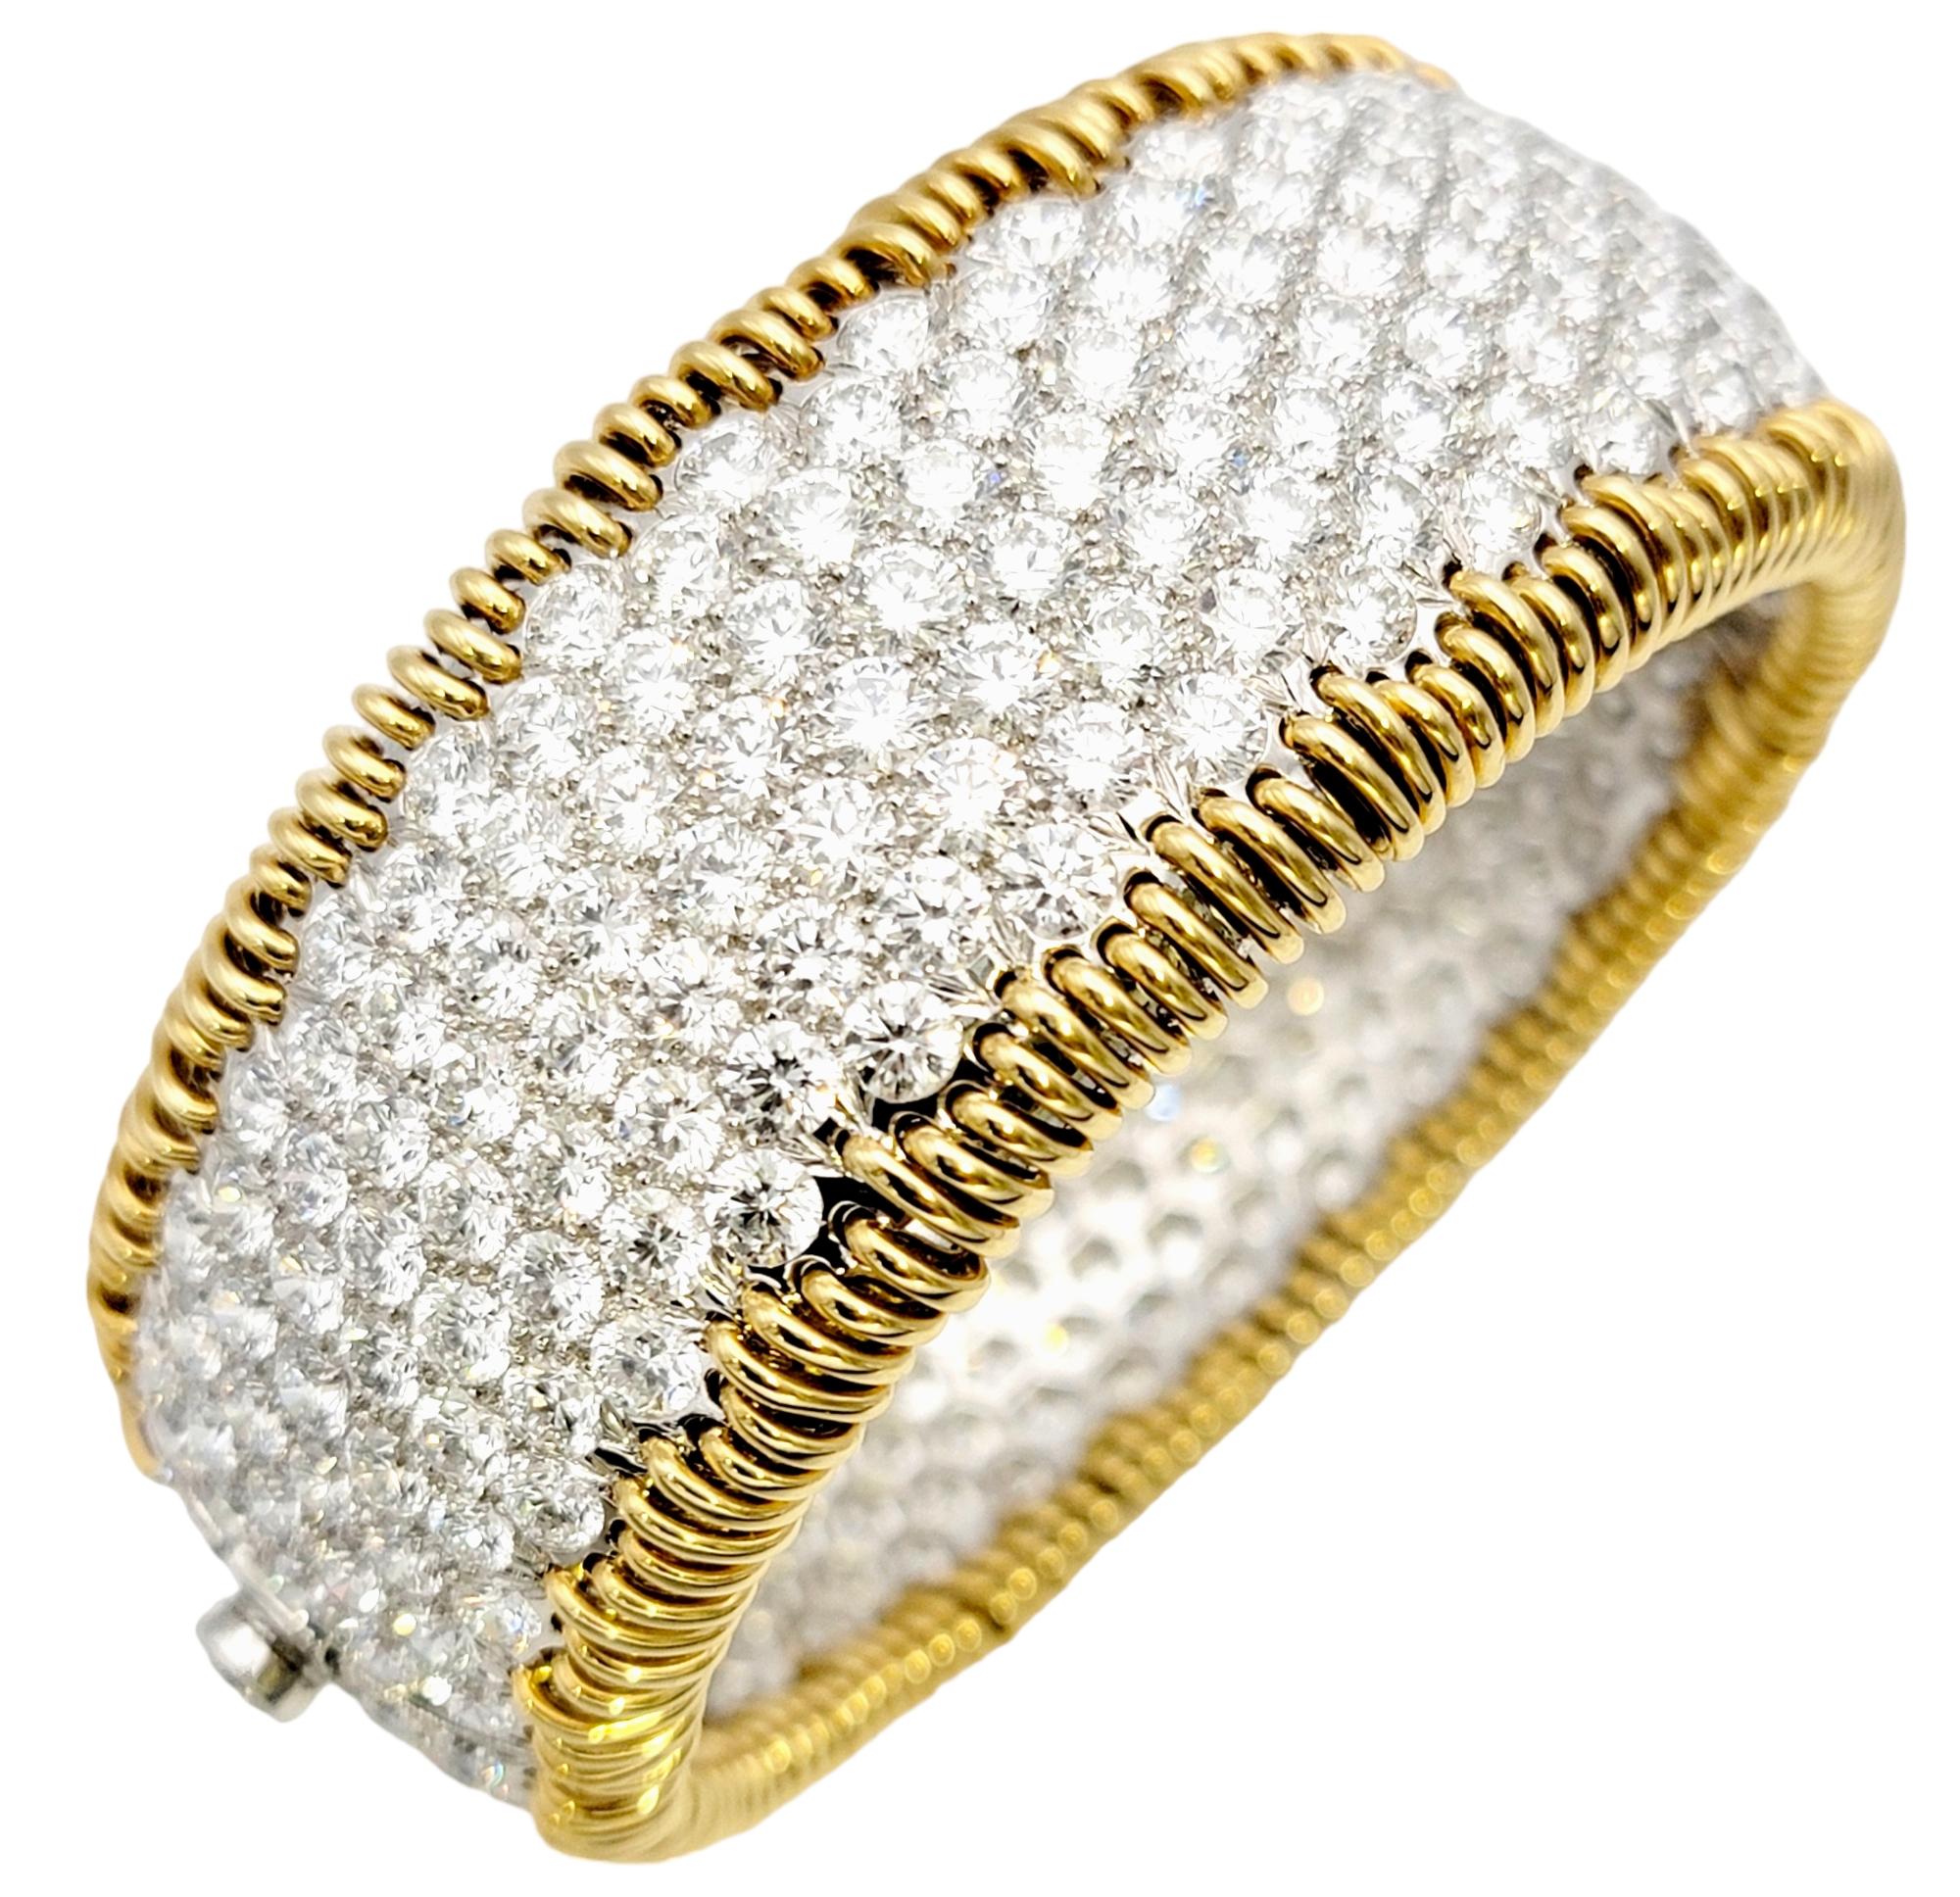 Contemporary Tiffany & Co. Schlumberger 'Stitches' Diamond Bangle Bracelet 41.46 Carats Total